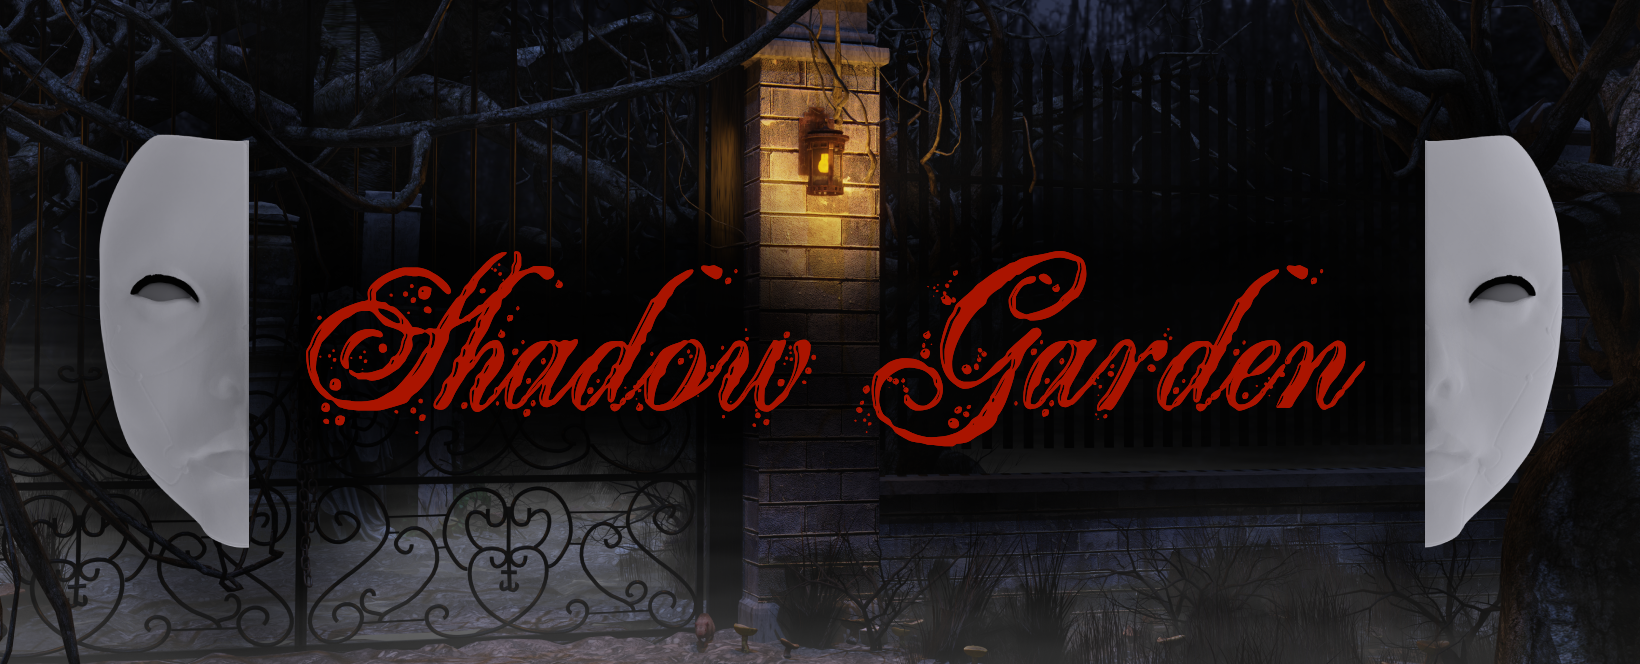 shadowgarden